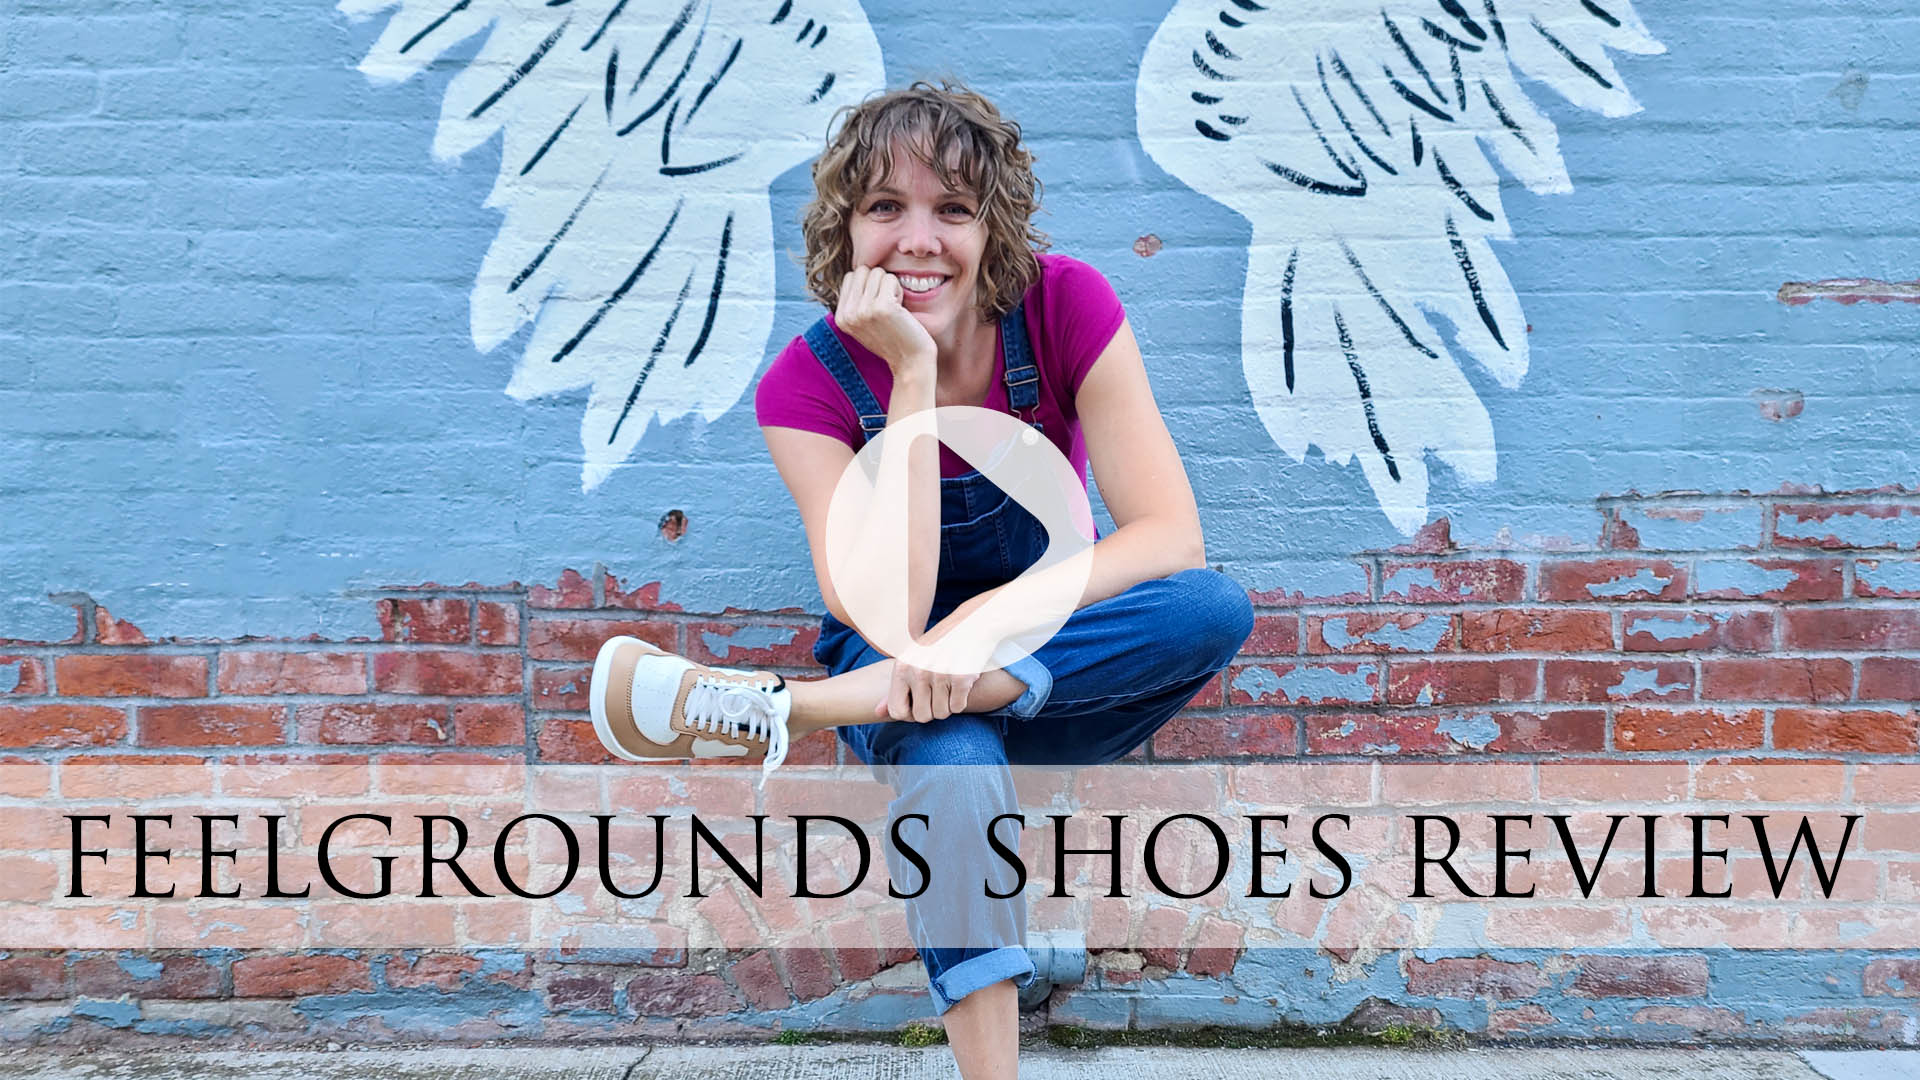 FeelGrounds Shoes Review Blog Video by Larissa of Prodigal Pieces | prodigalpieces.com #prodigalpieces